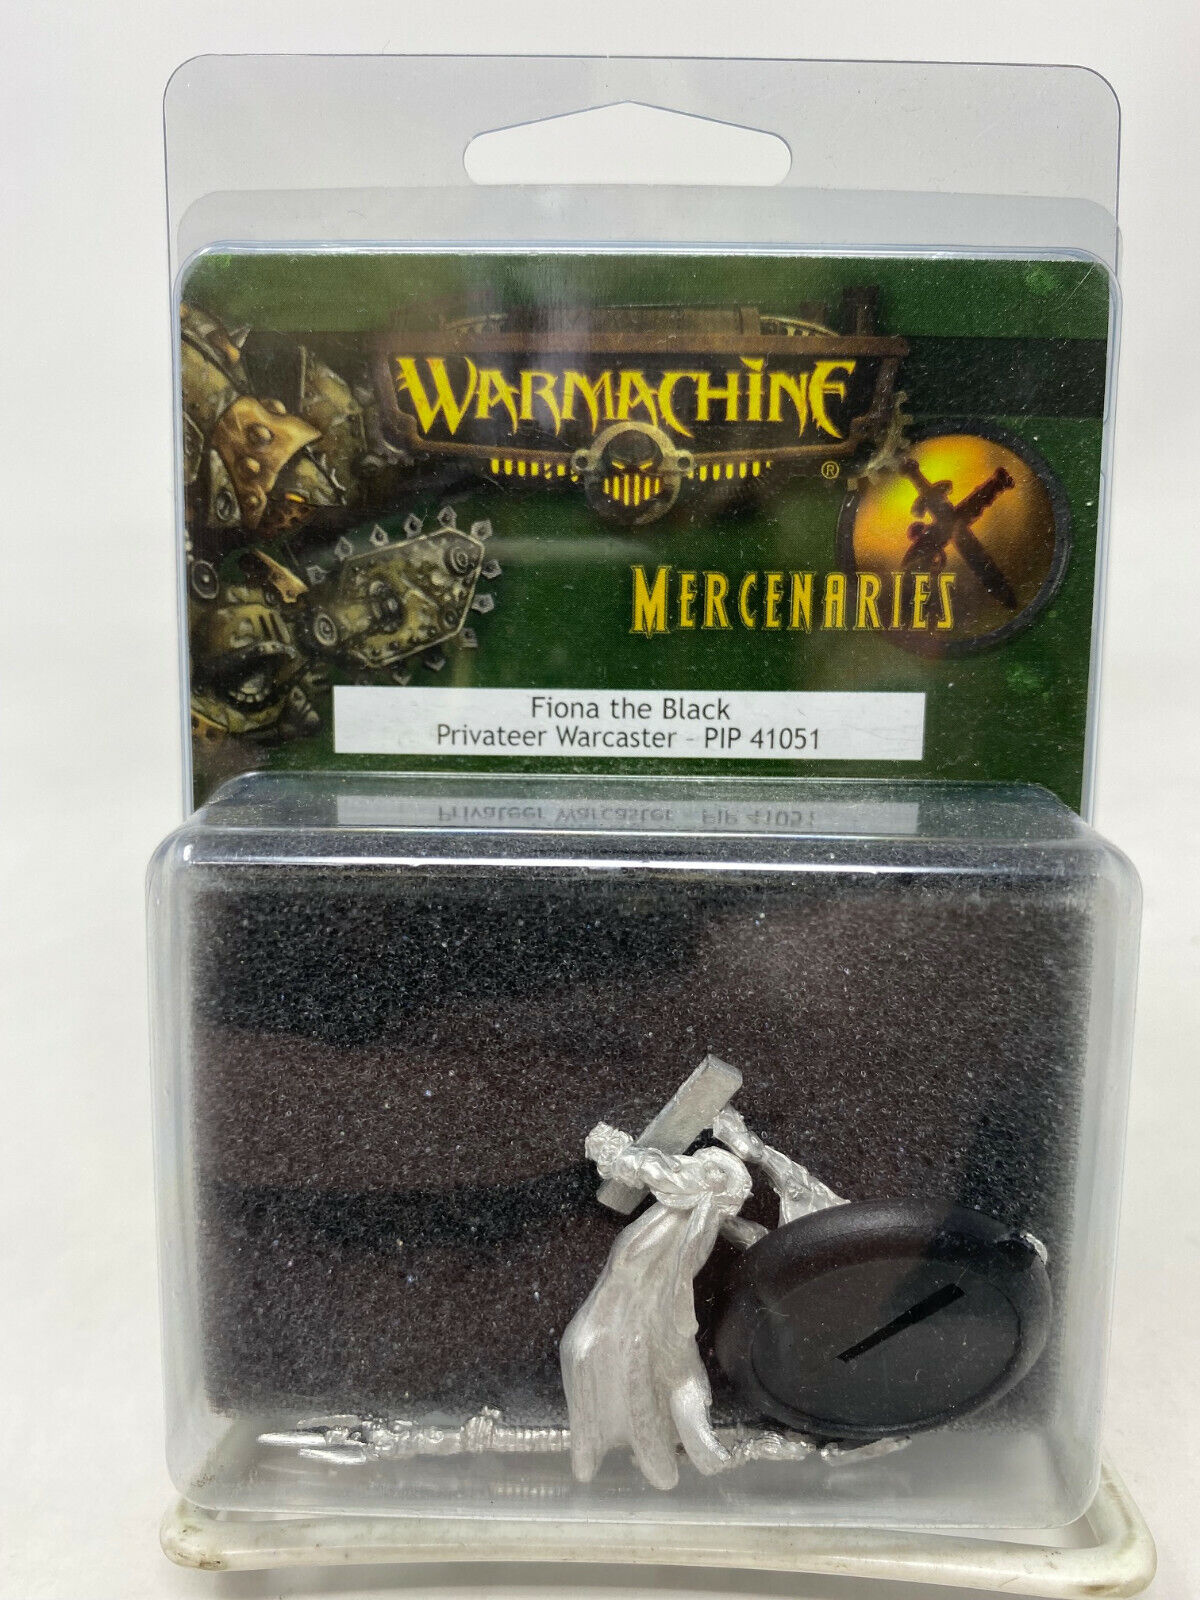 Warmachine: Mercenaries Fiona the Black Privateer Warcaster PIP 41051